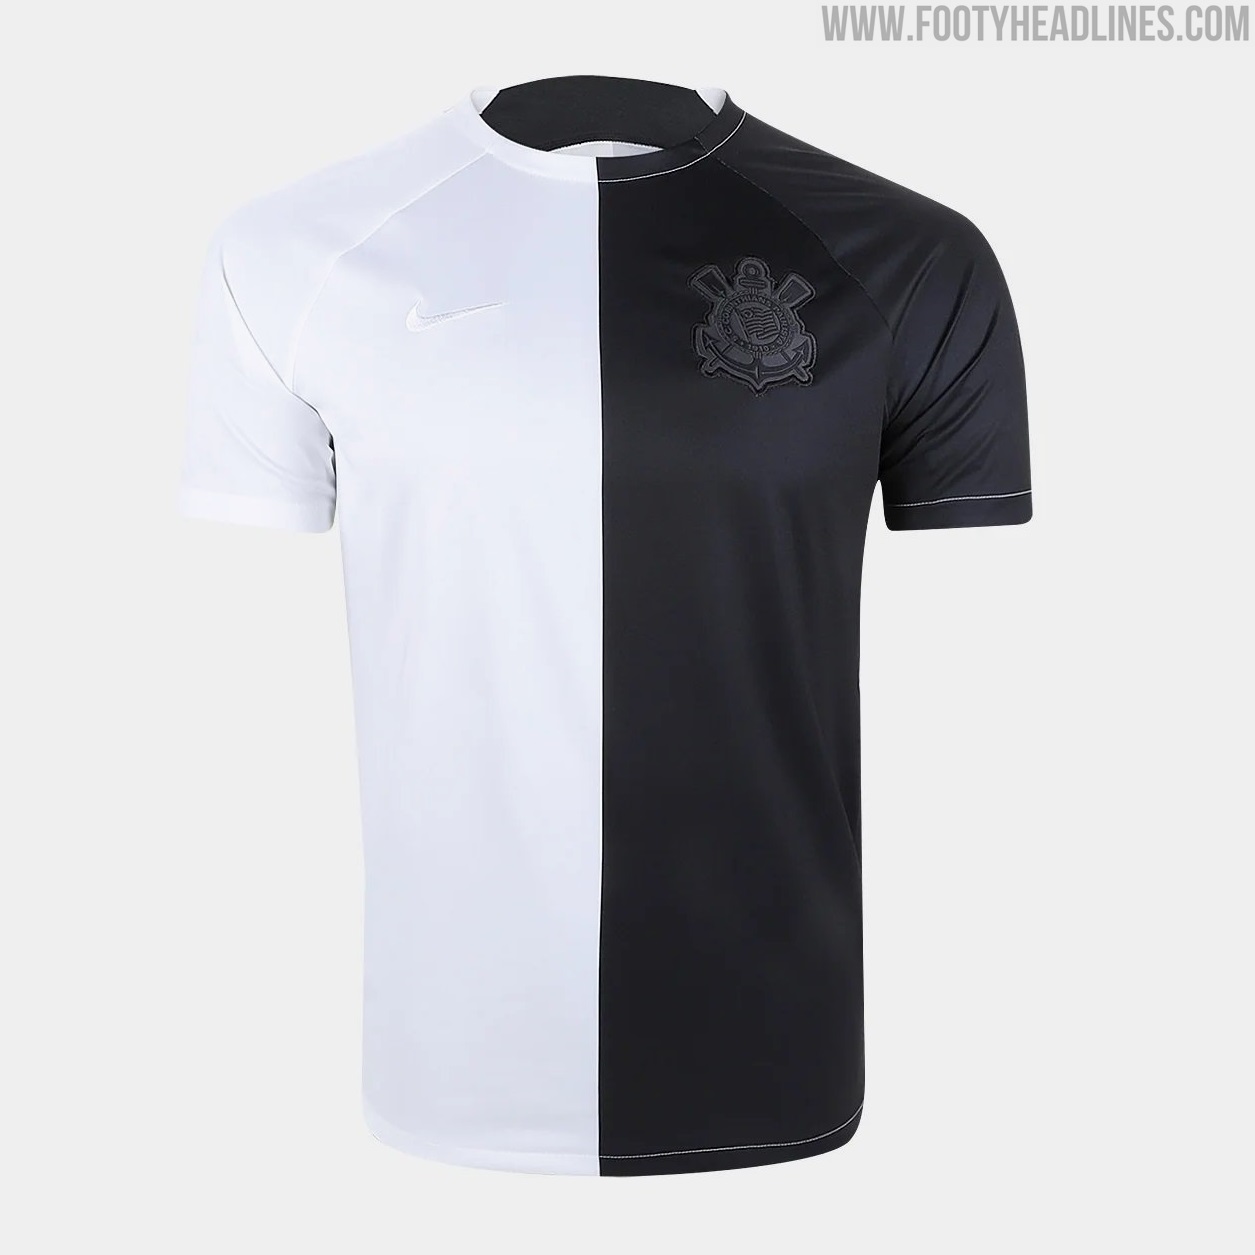 Camiseta Nike Corinthians  Dri-fit – Infantil